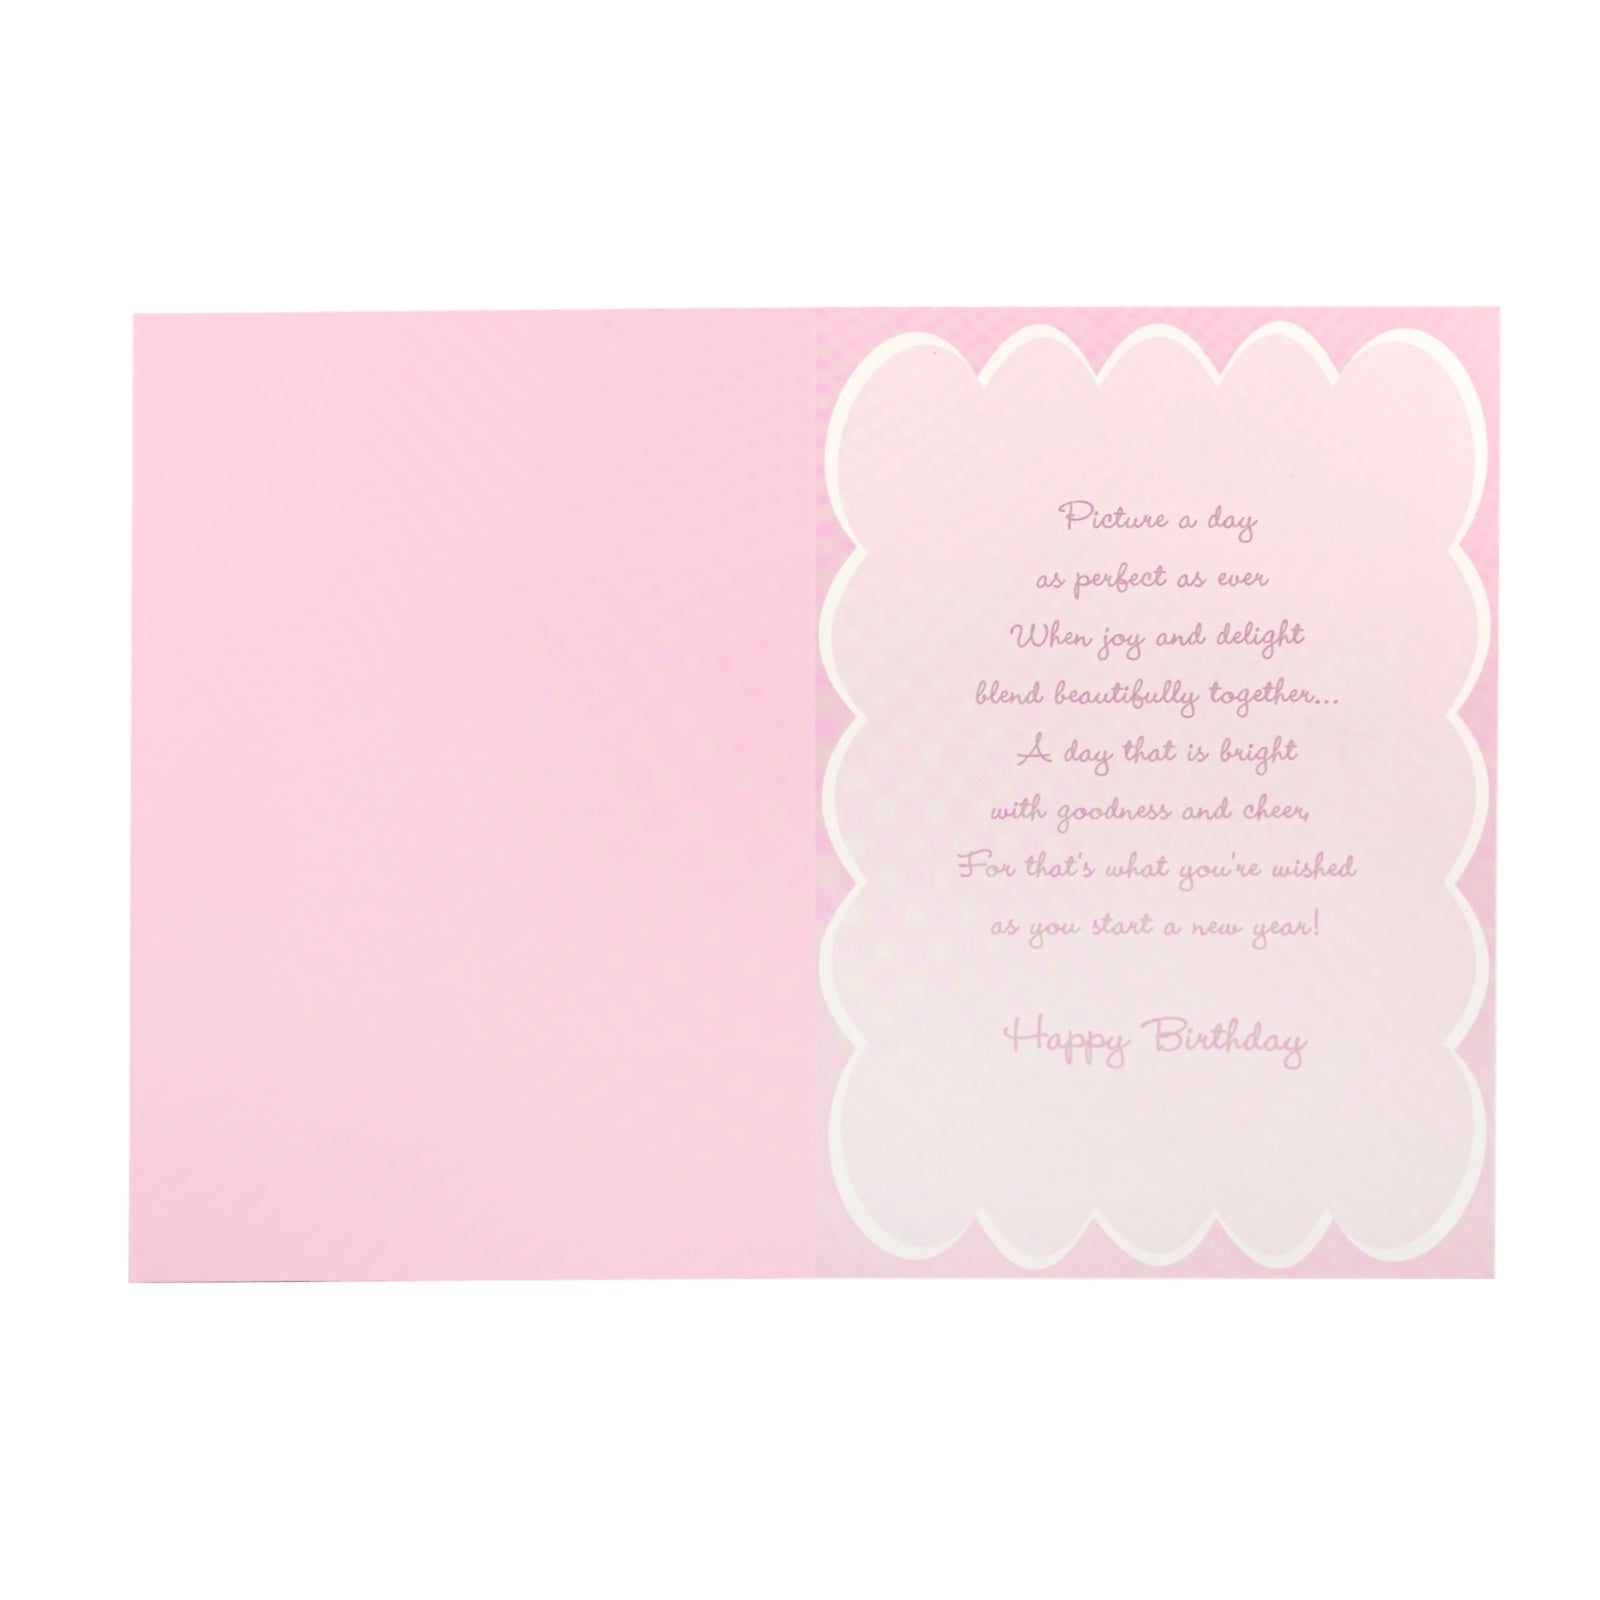 Designer Greetings Birthday Card - Wonderful Birthday Pink